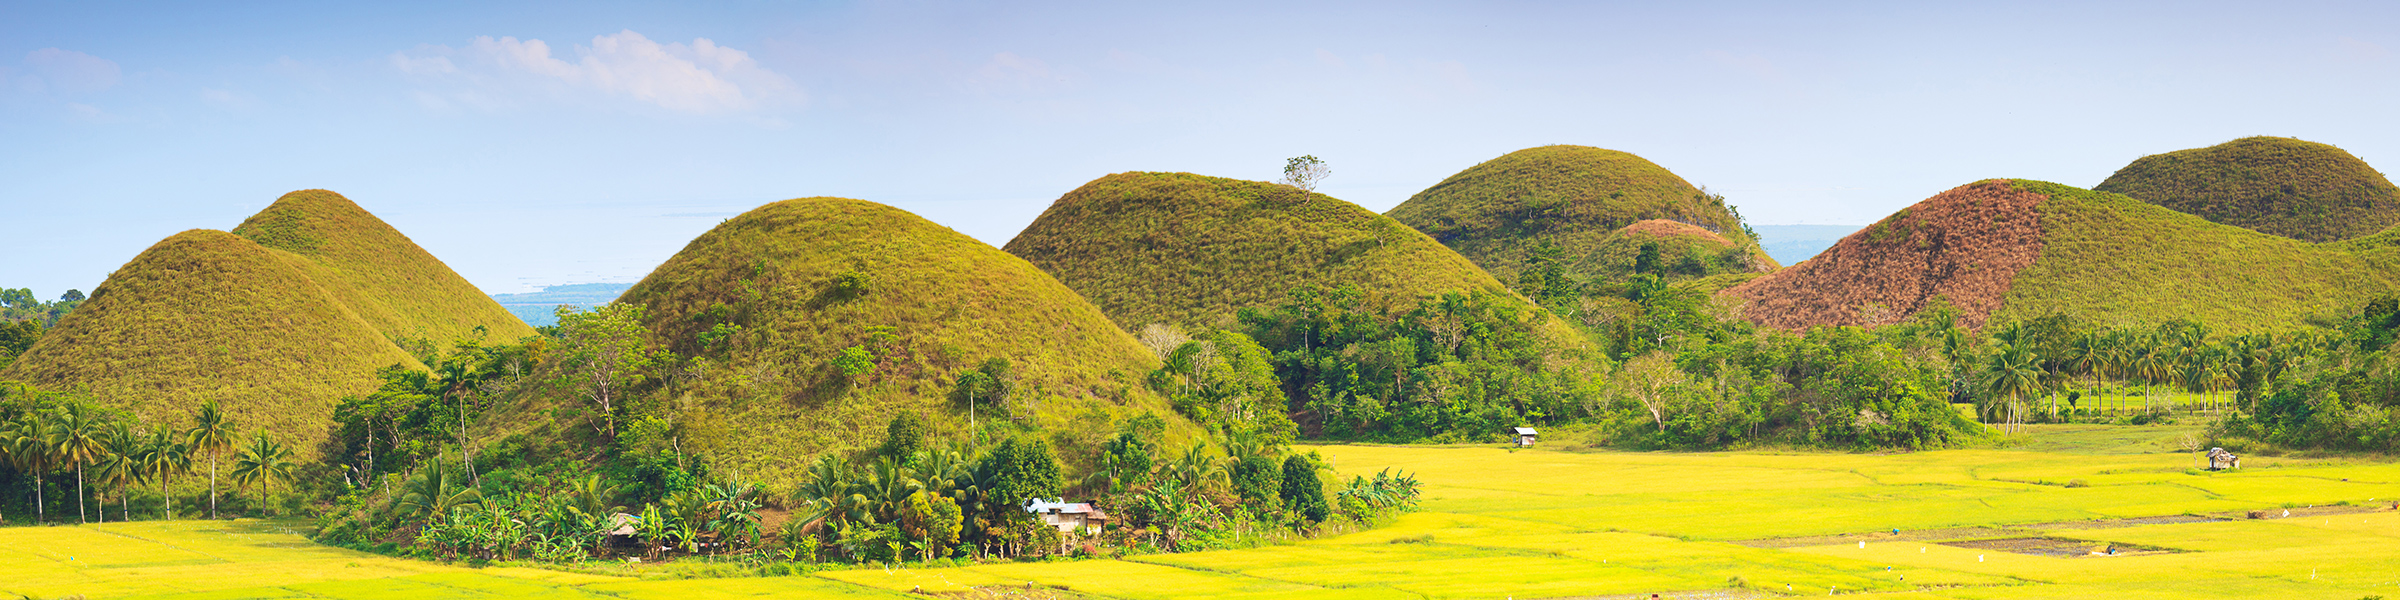 Philippines Chocolate Hills